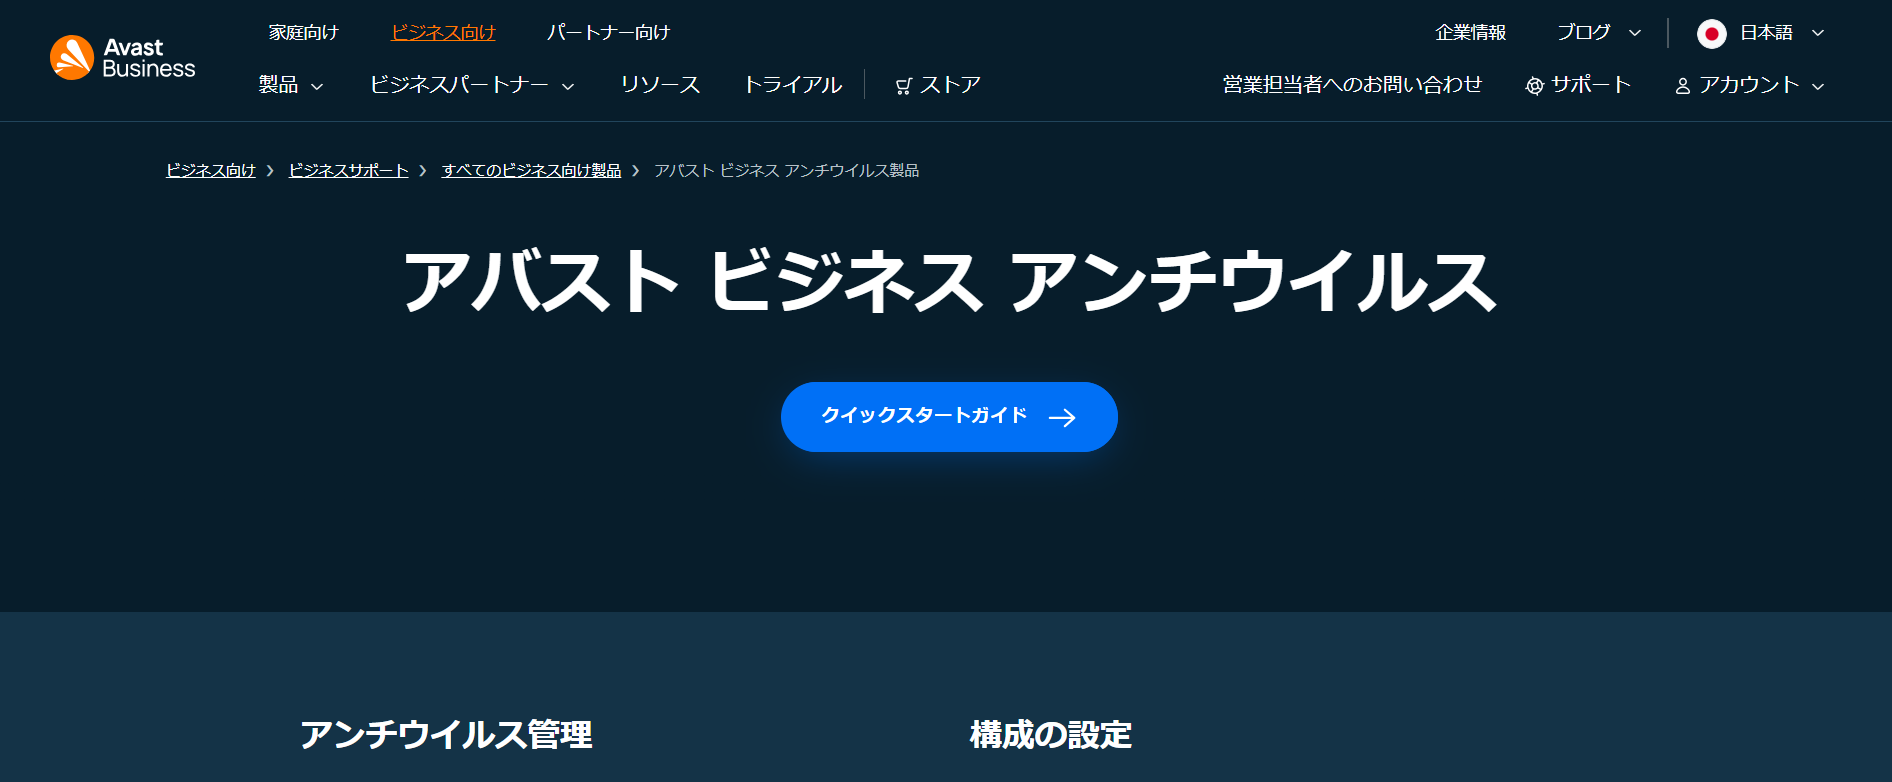 Avast Software Japan 合同会社